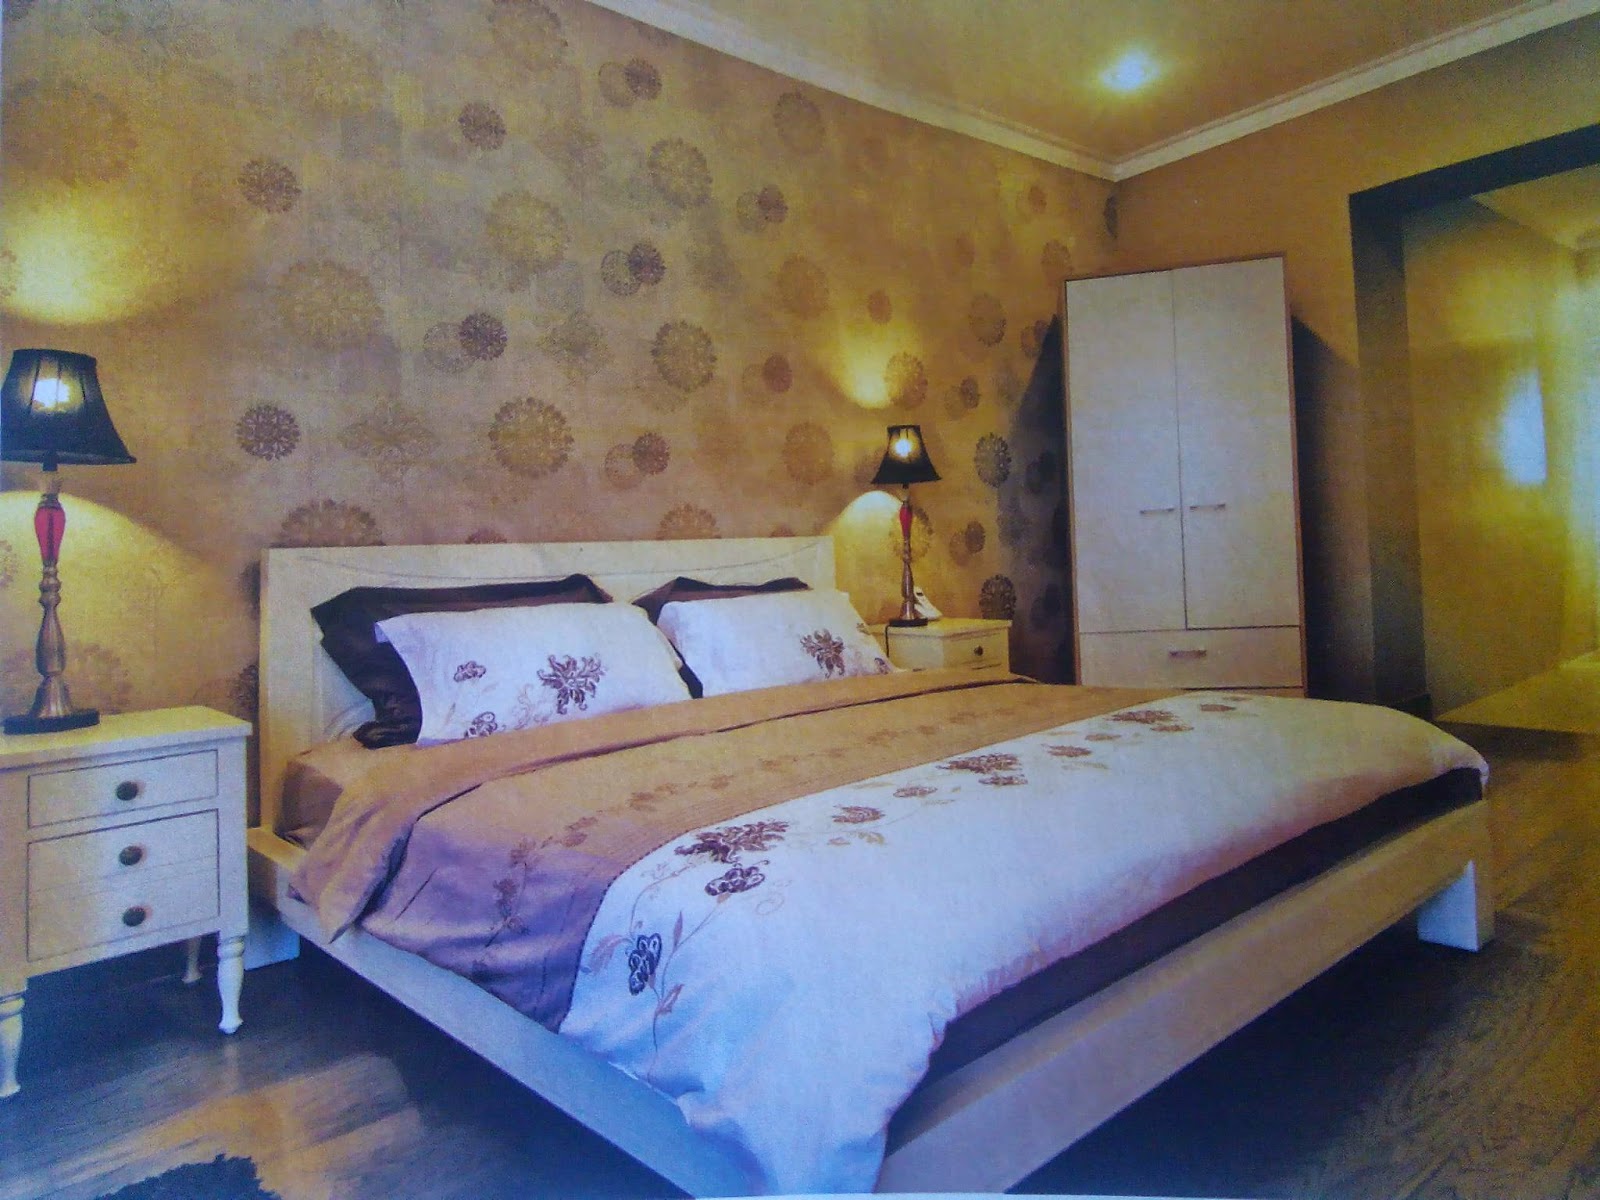 wallpaper dinding kamar tidur romantis,bedroom,bed,room,furniture,property